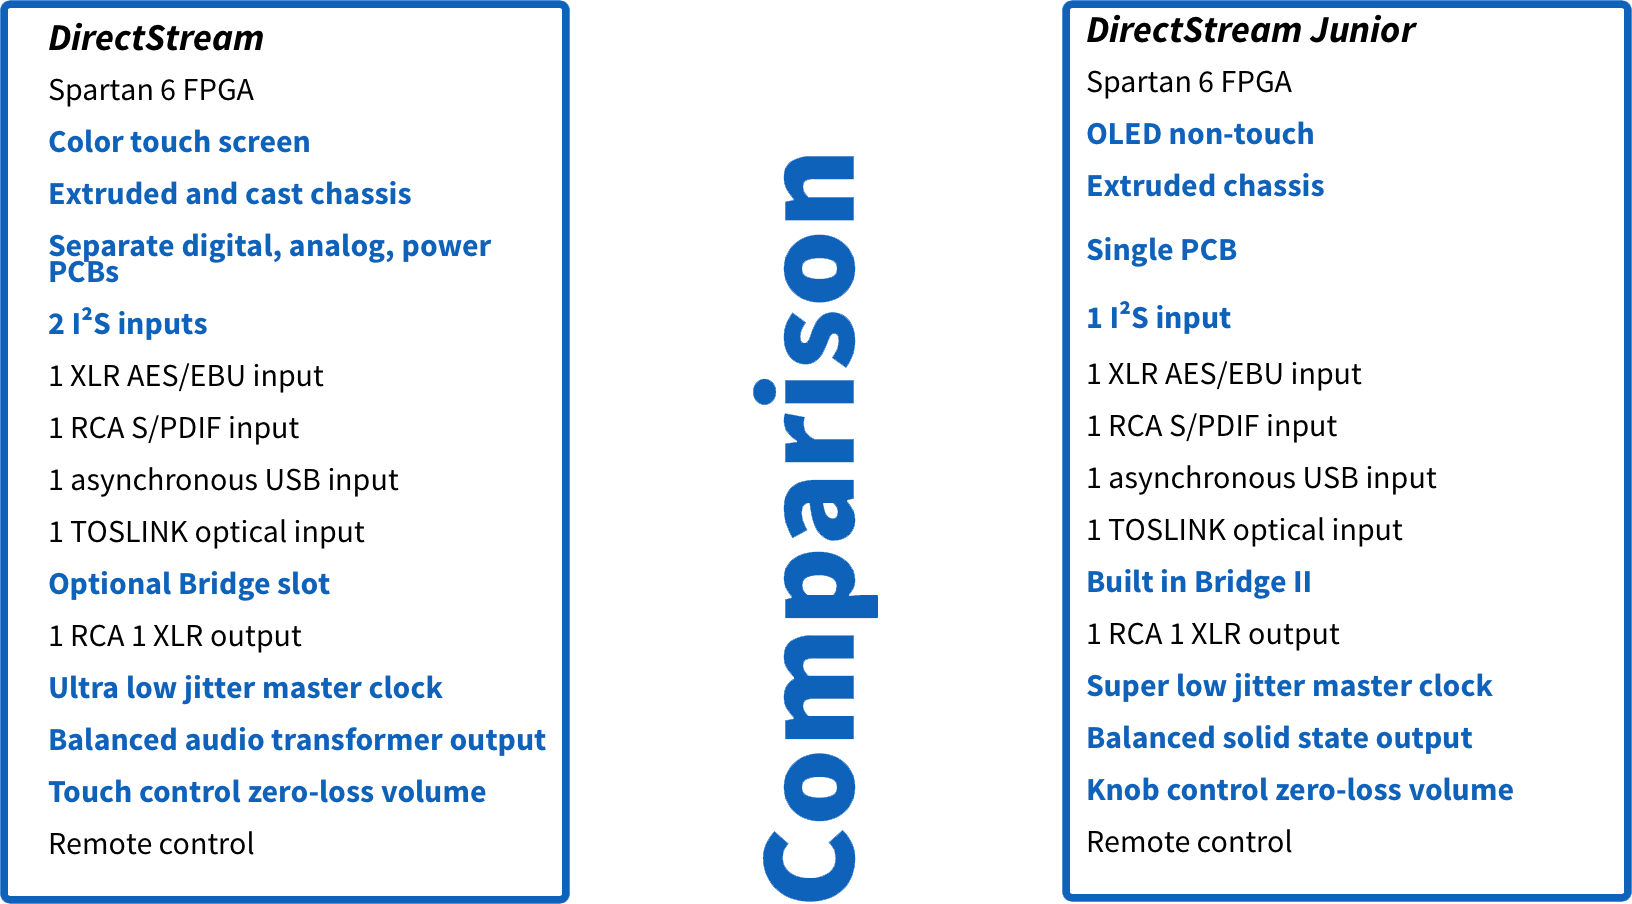 DirectStream-Junior-dsd-dsj-comparison-chart